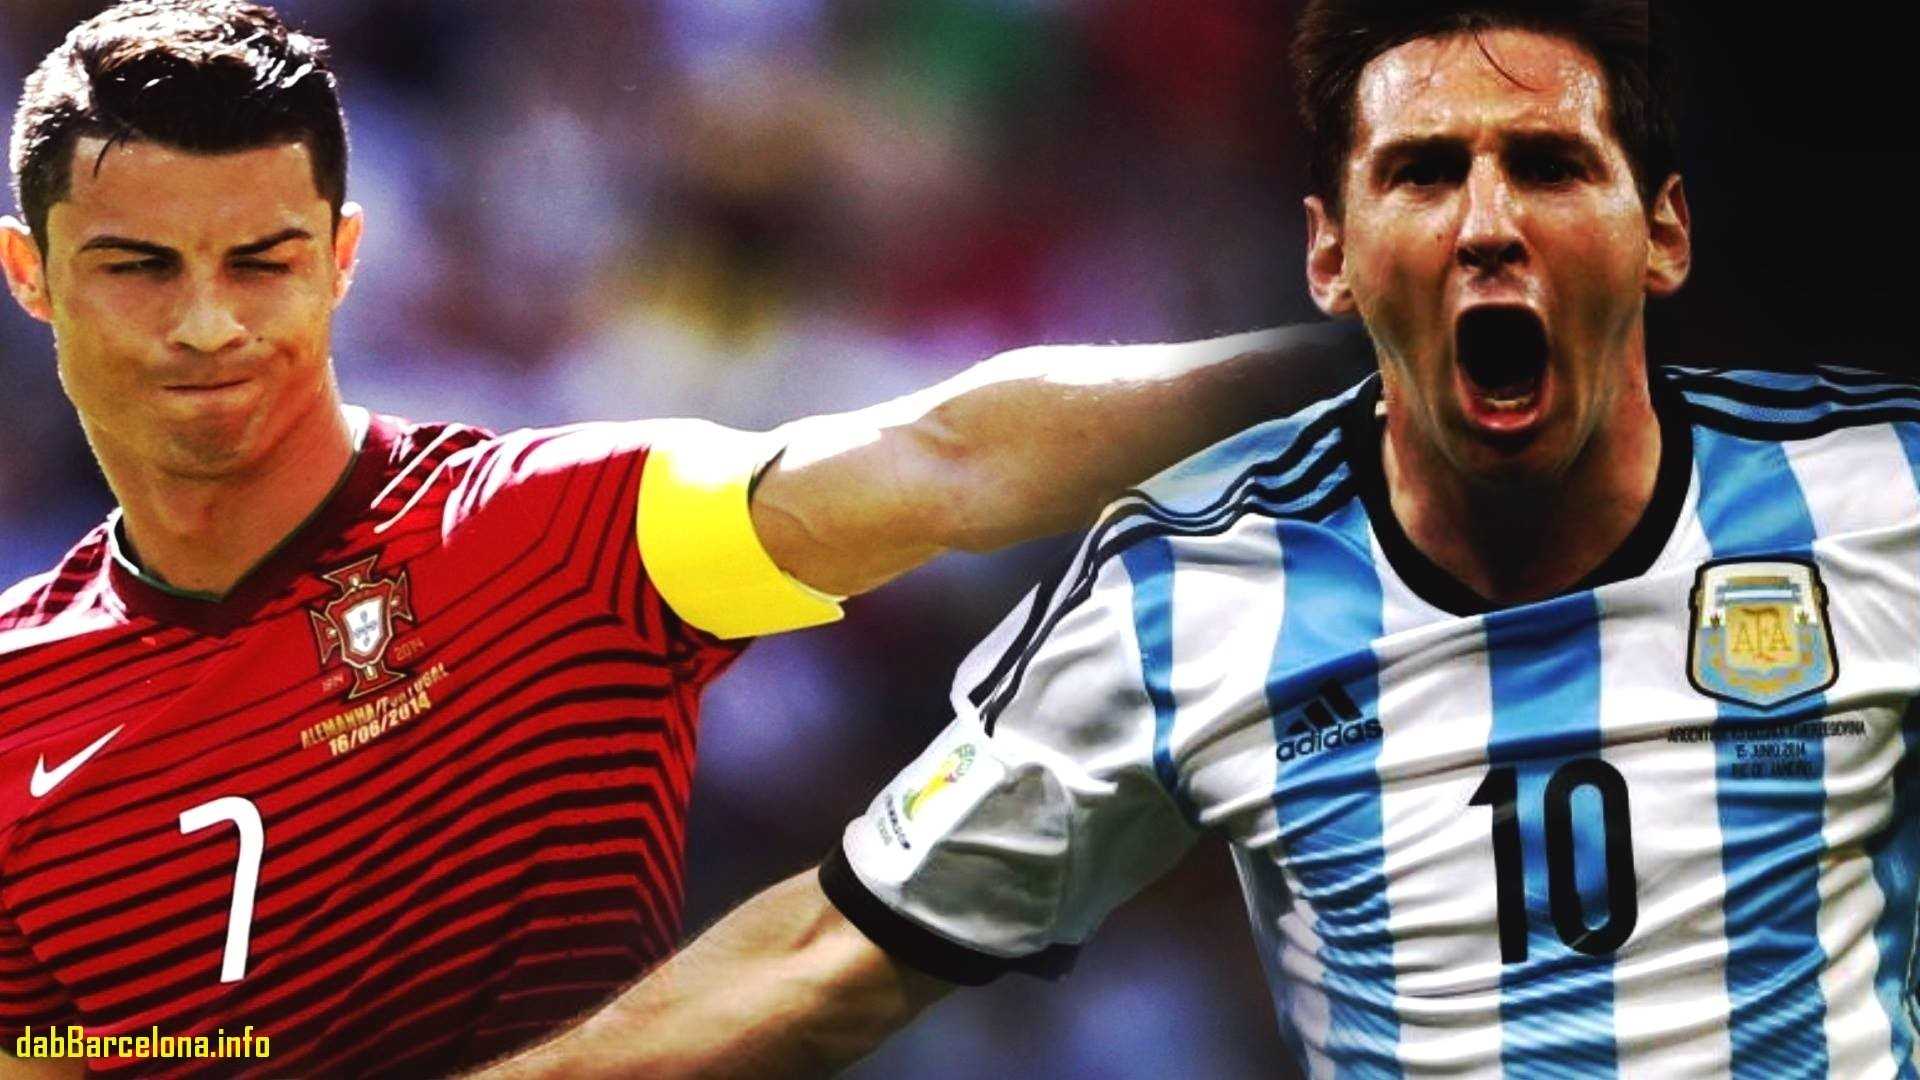 Messi vs Ronaldo Wallpaper 2018 HD On HDWallpaperPage